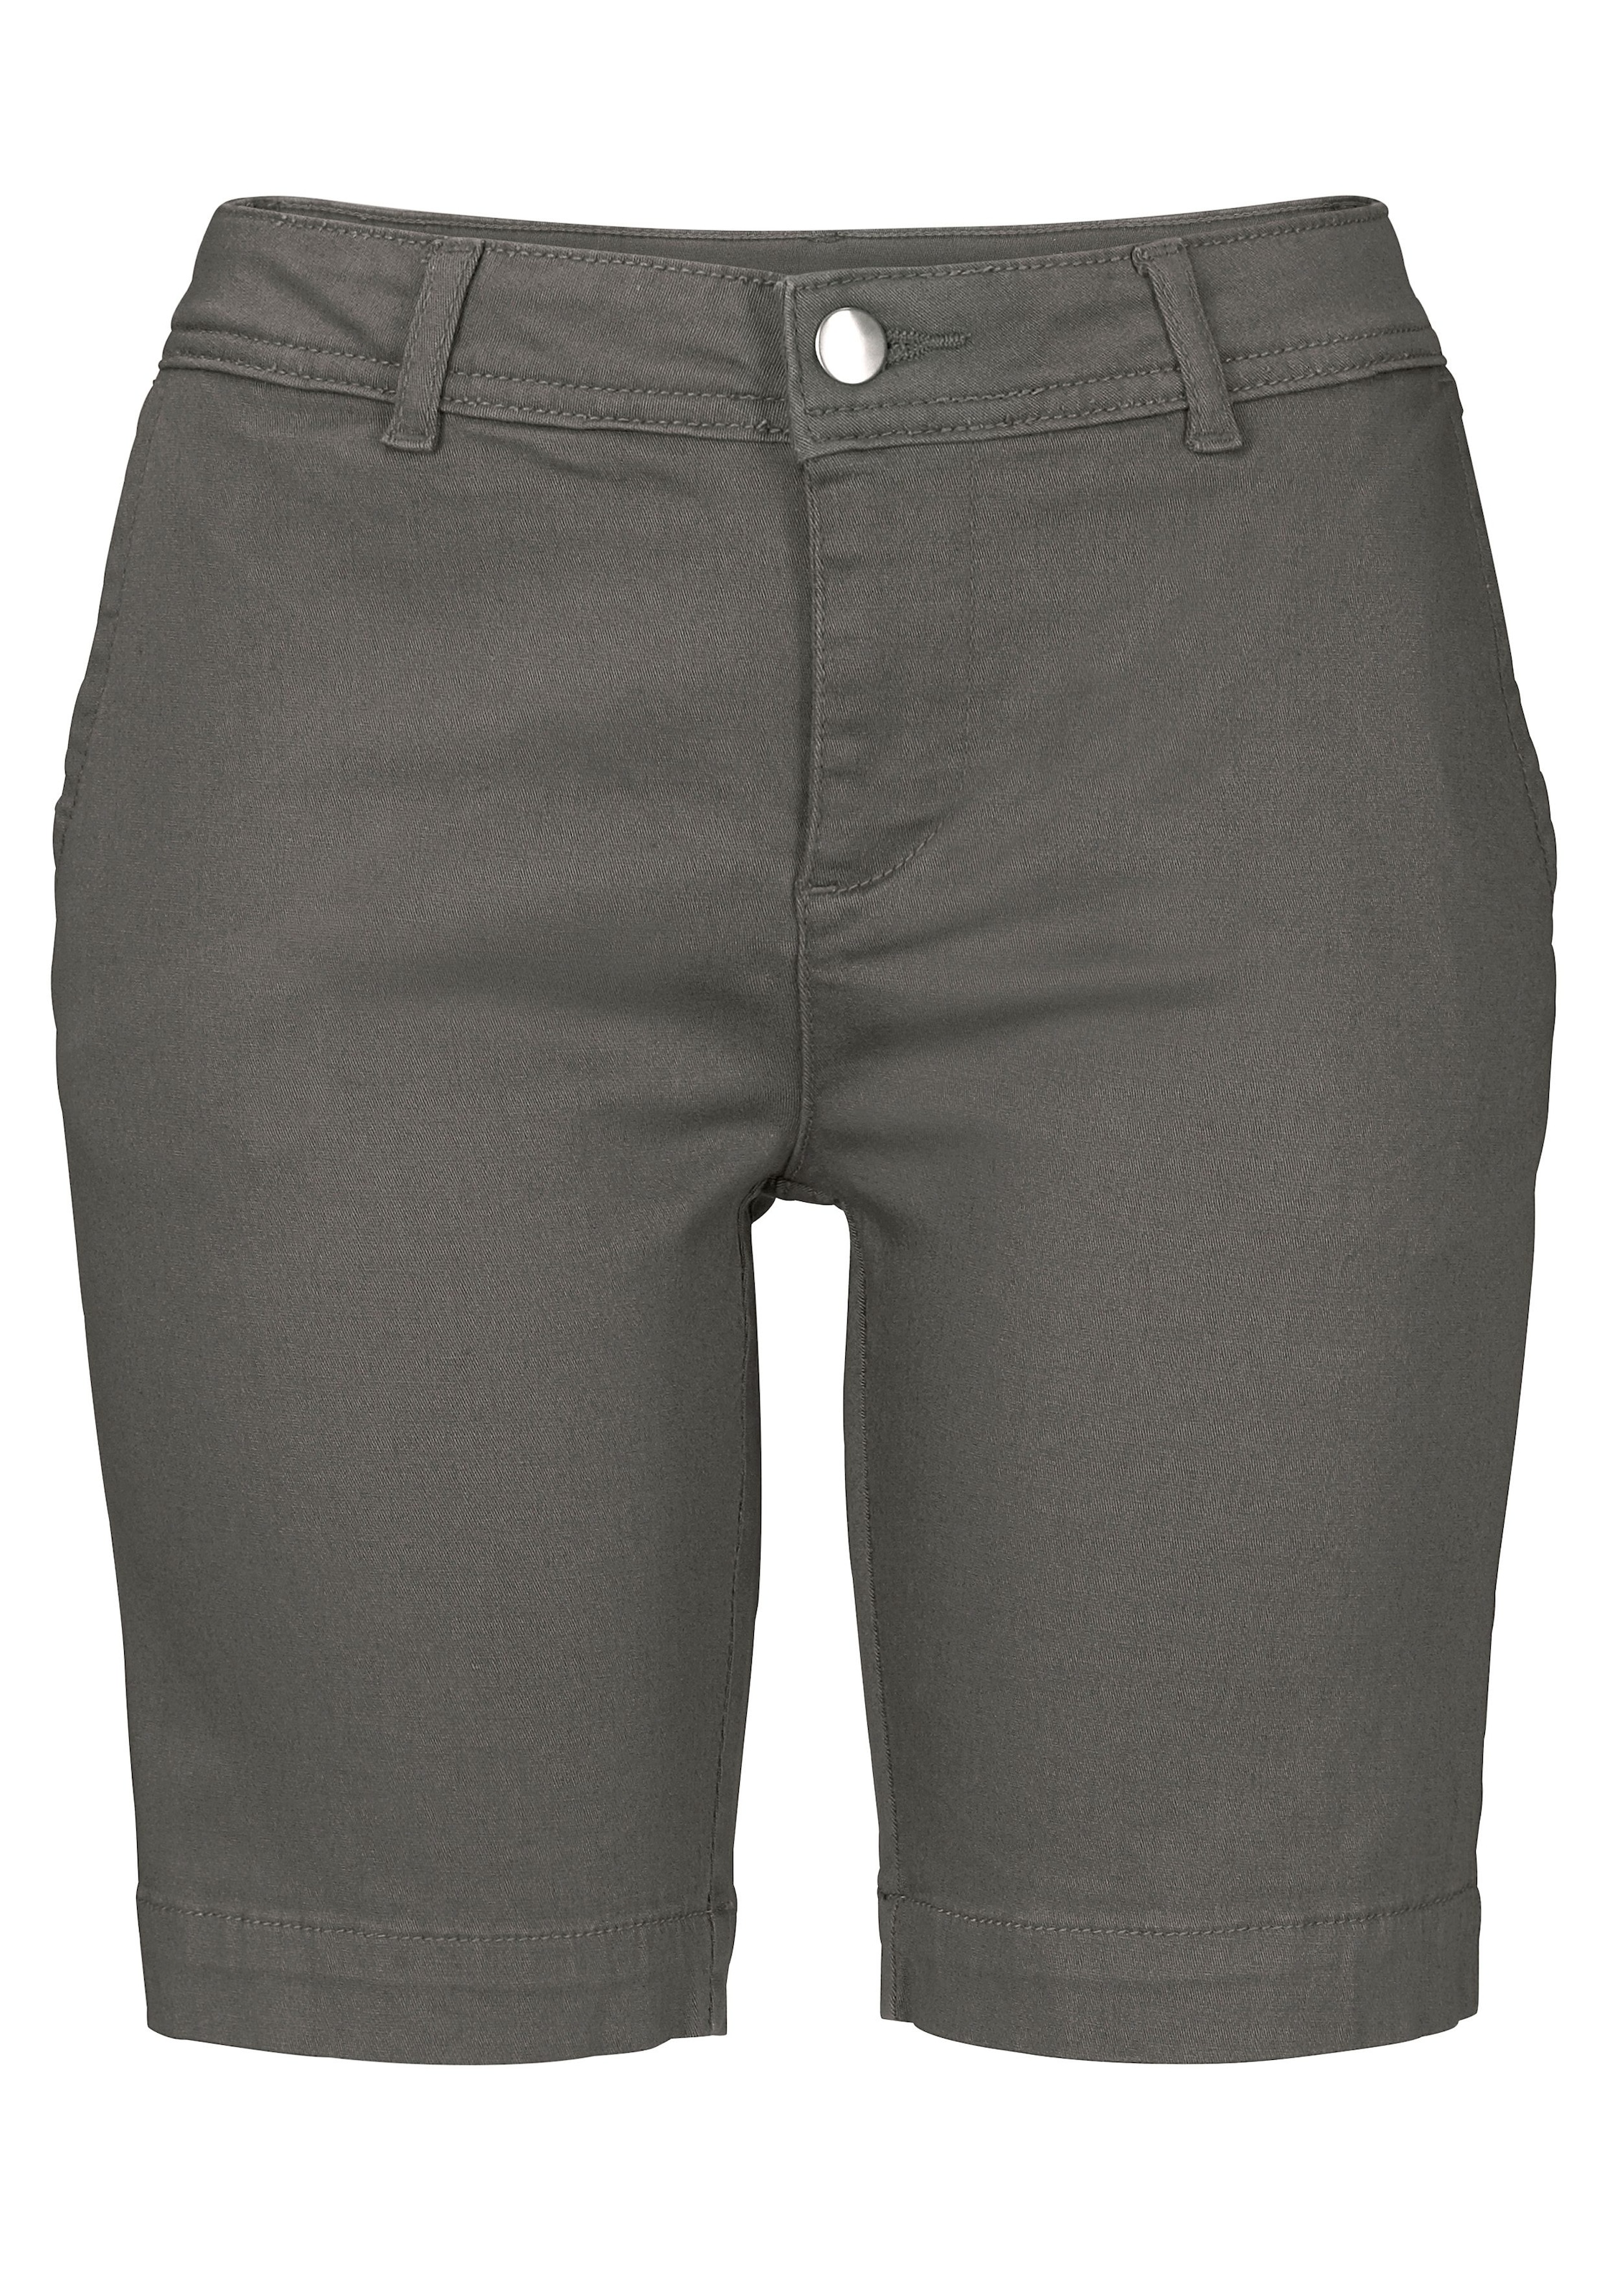 Shop Shorts online kaufen | LASCANA Online